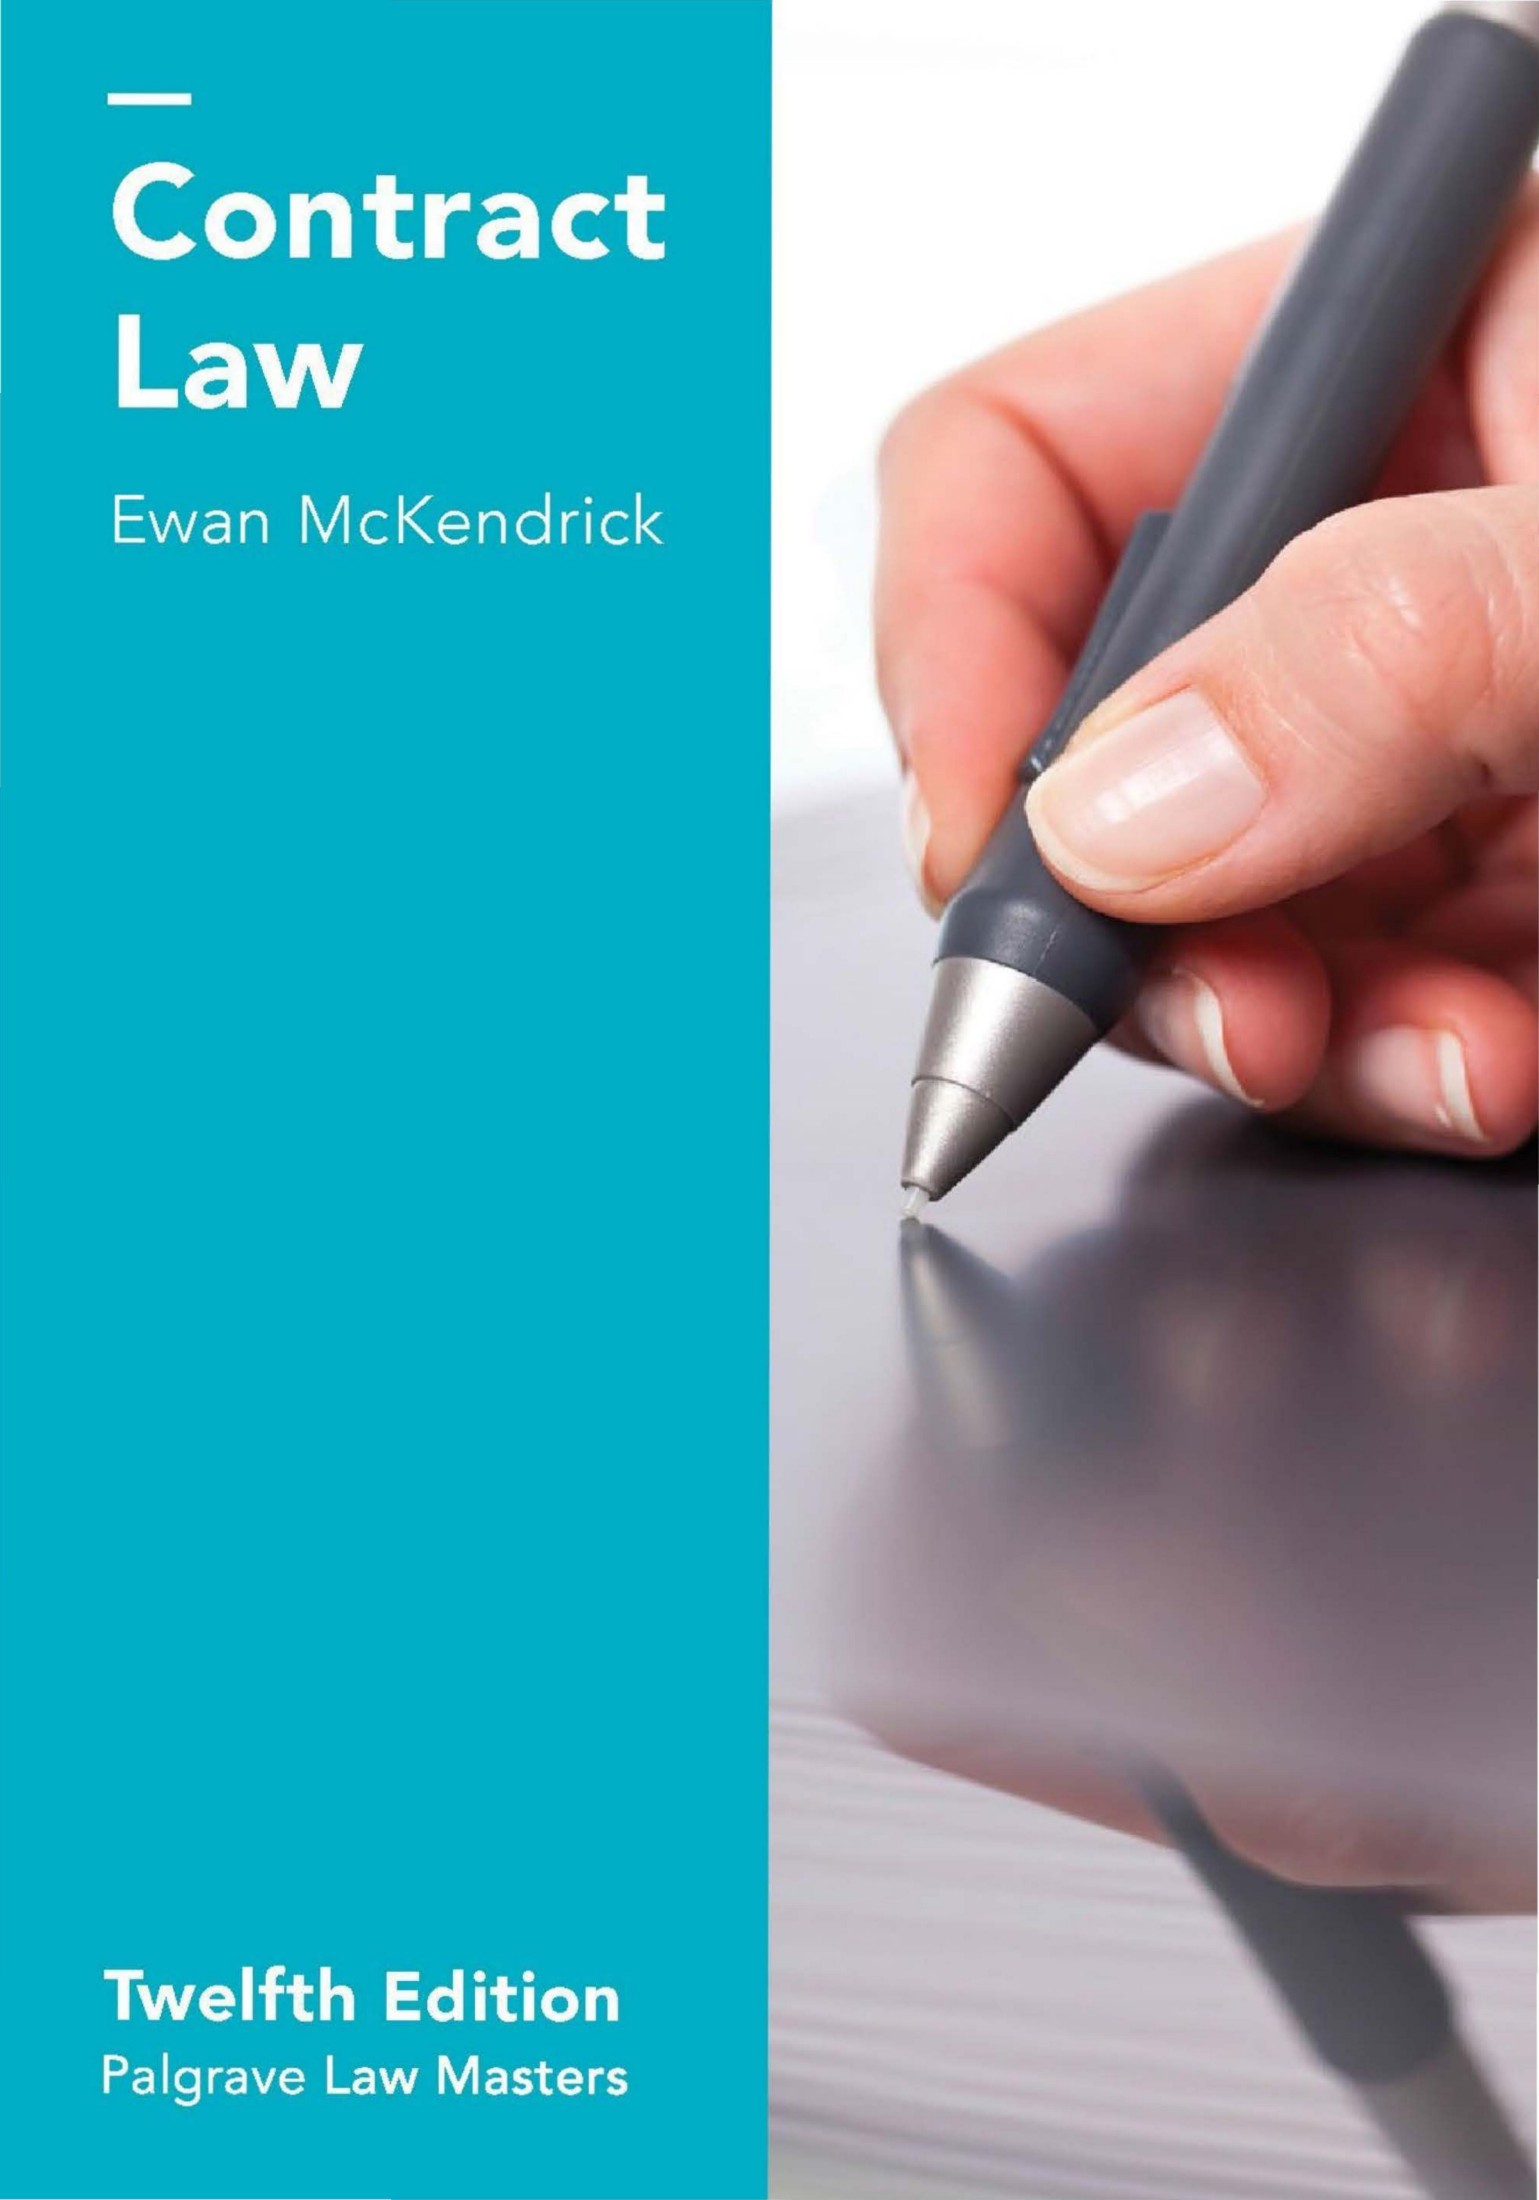 Contract Law 12th Edition by Ewan McKendrick.jpg